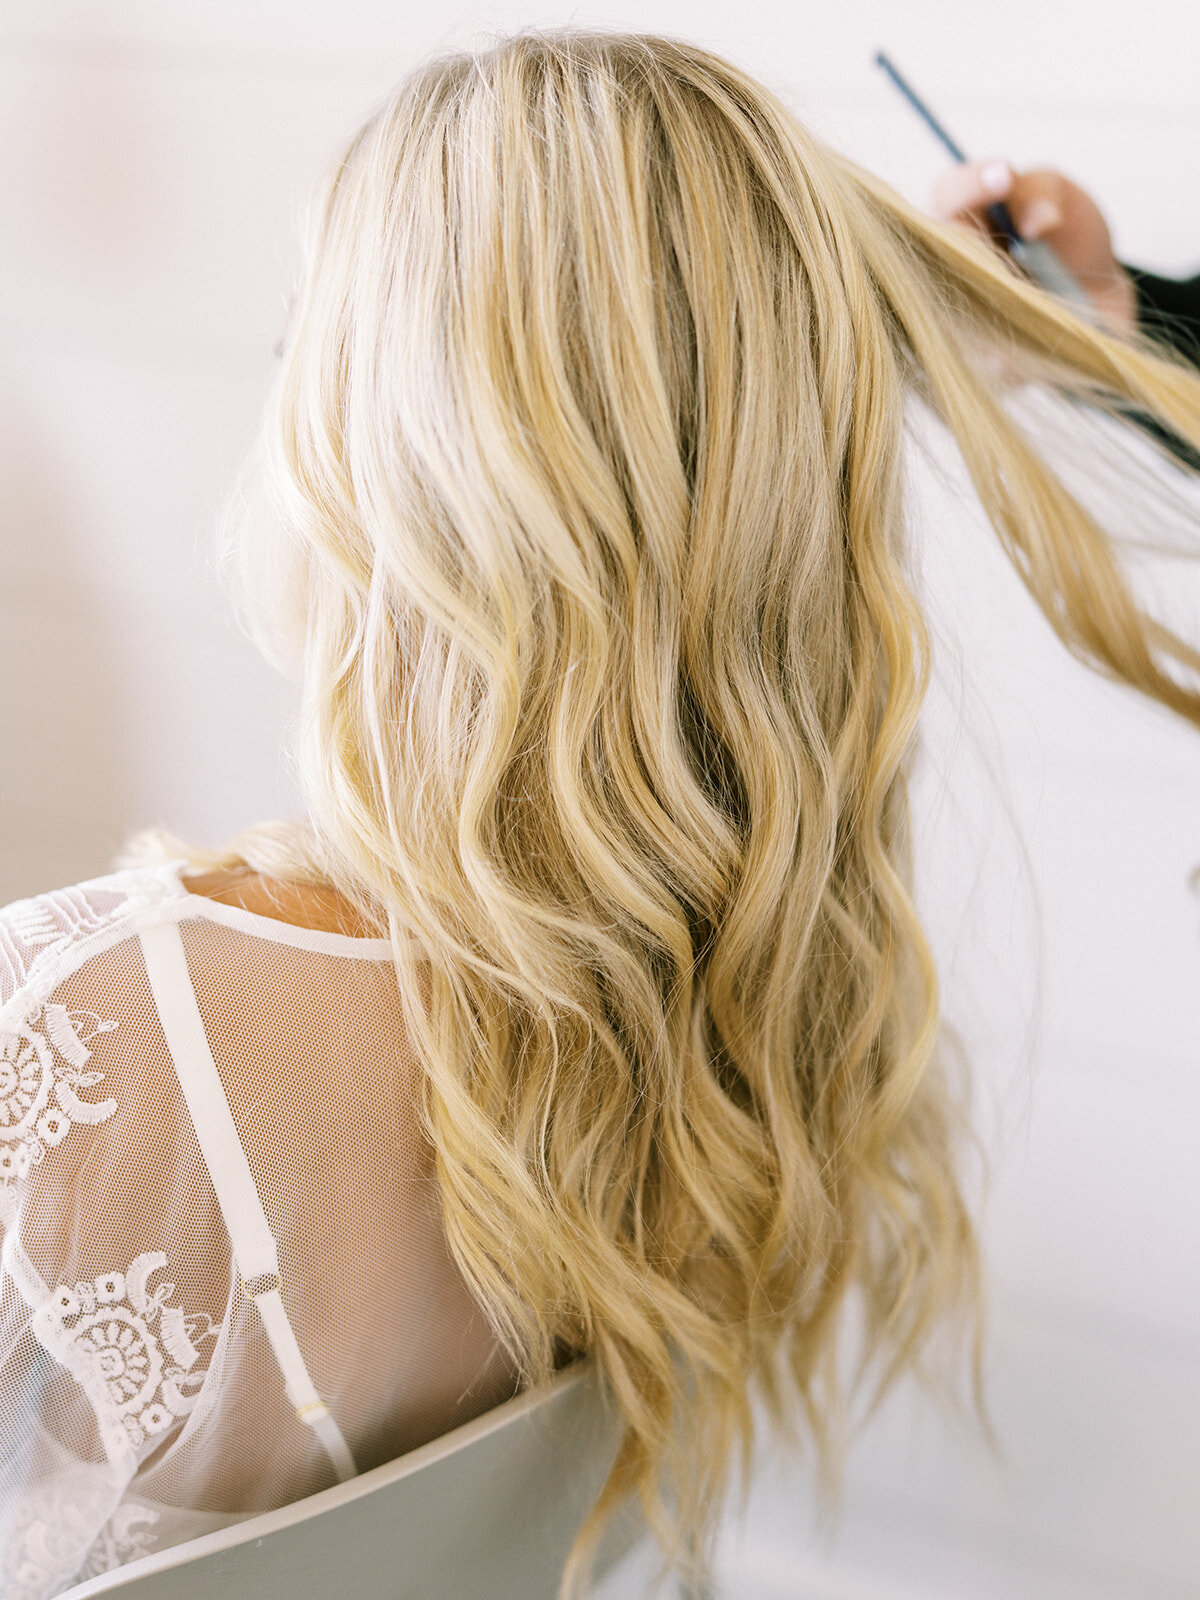 bride-getting-ready-hair